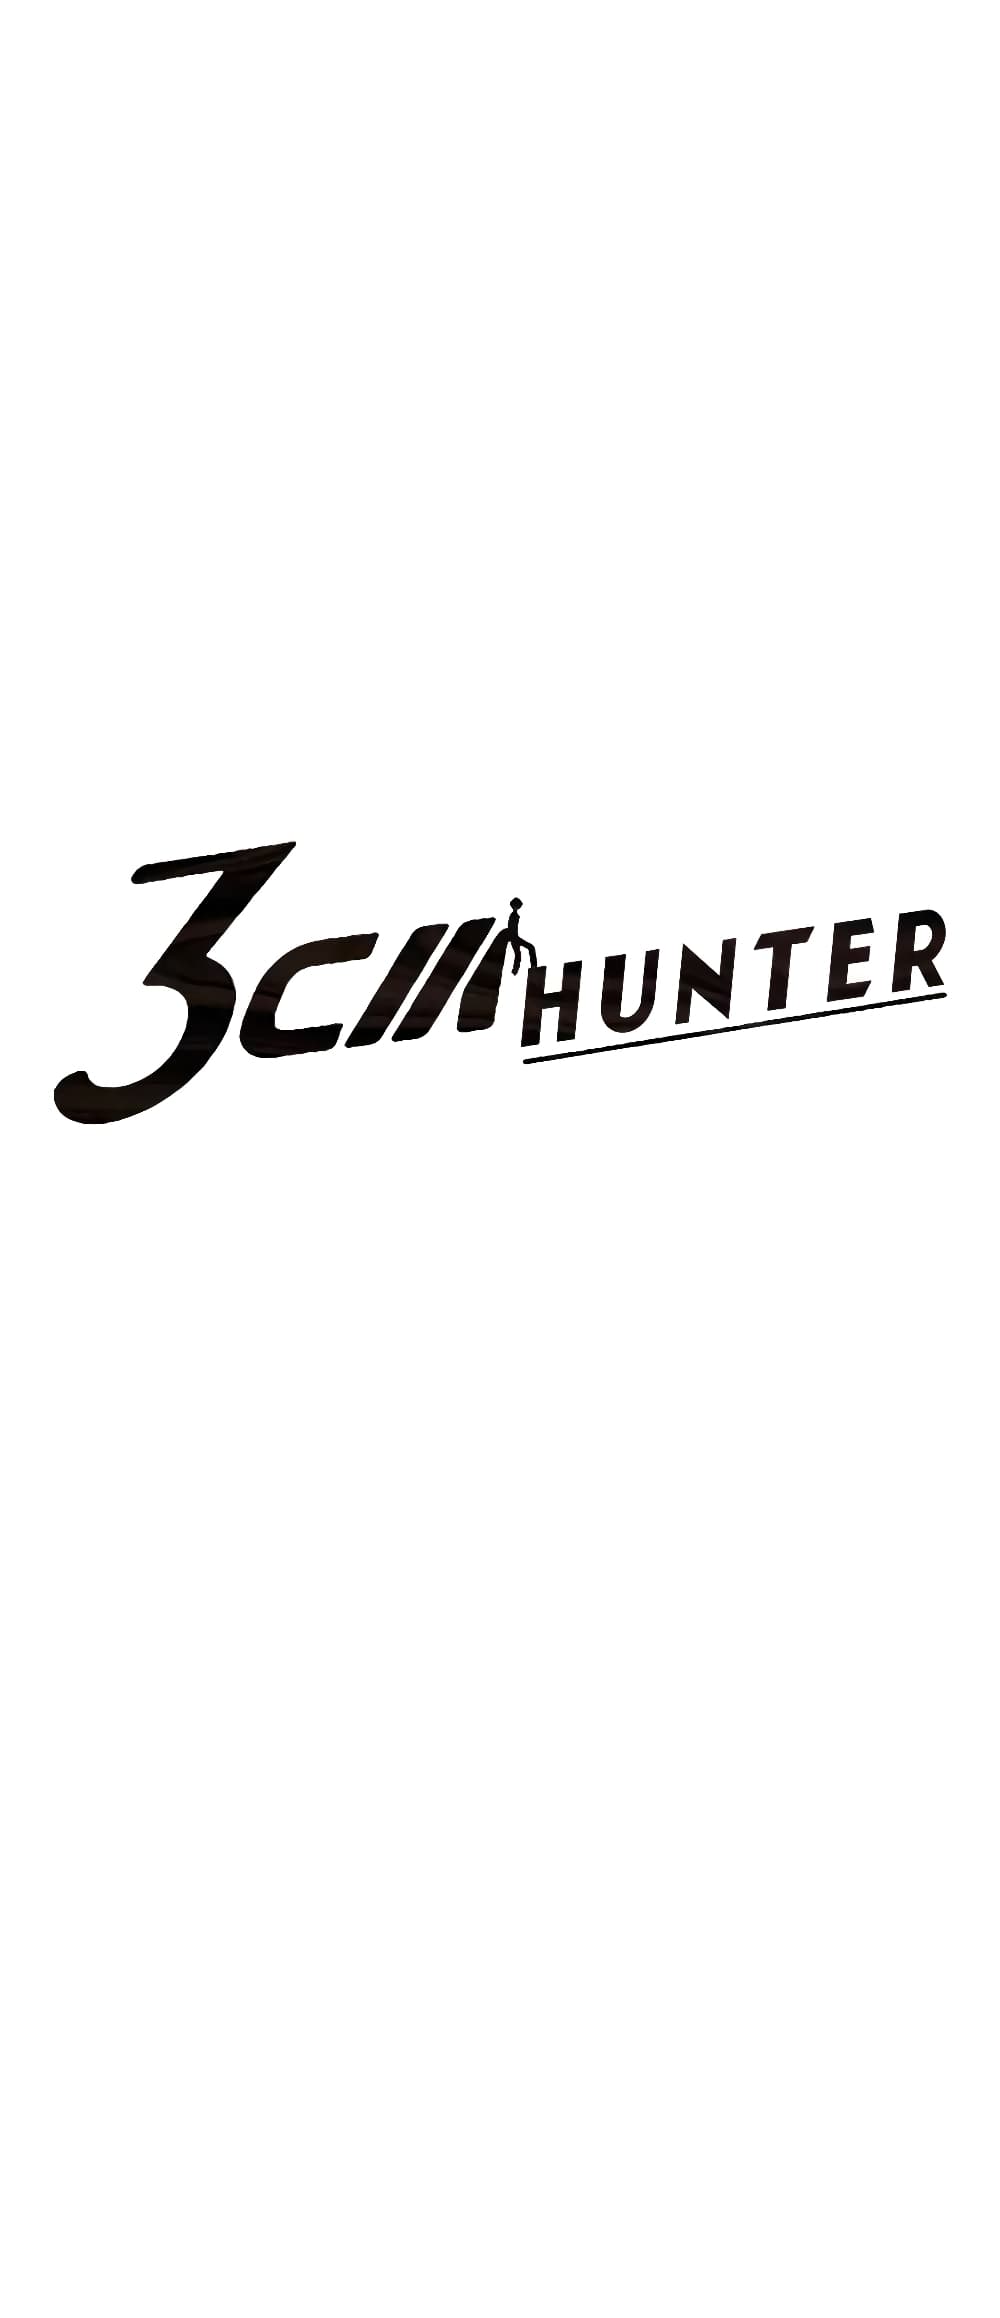 3CM Hunter5 (5)